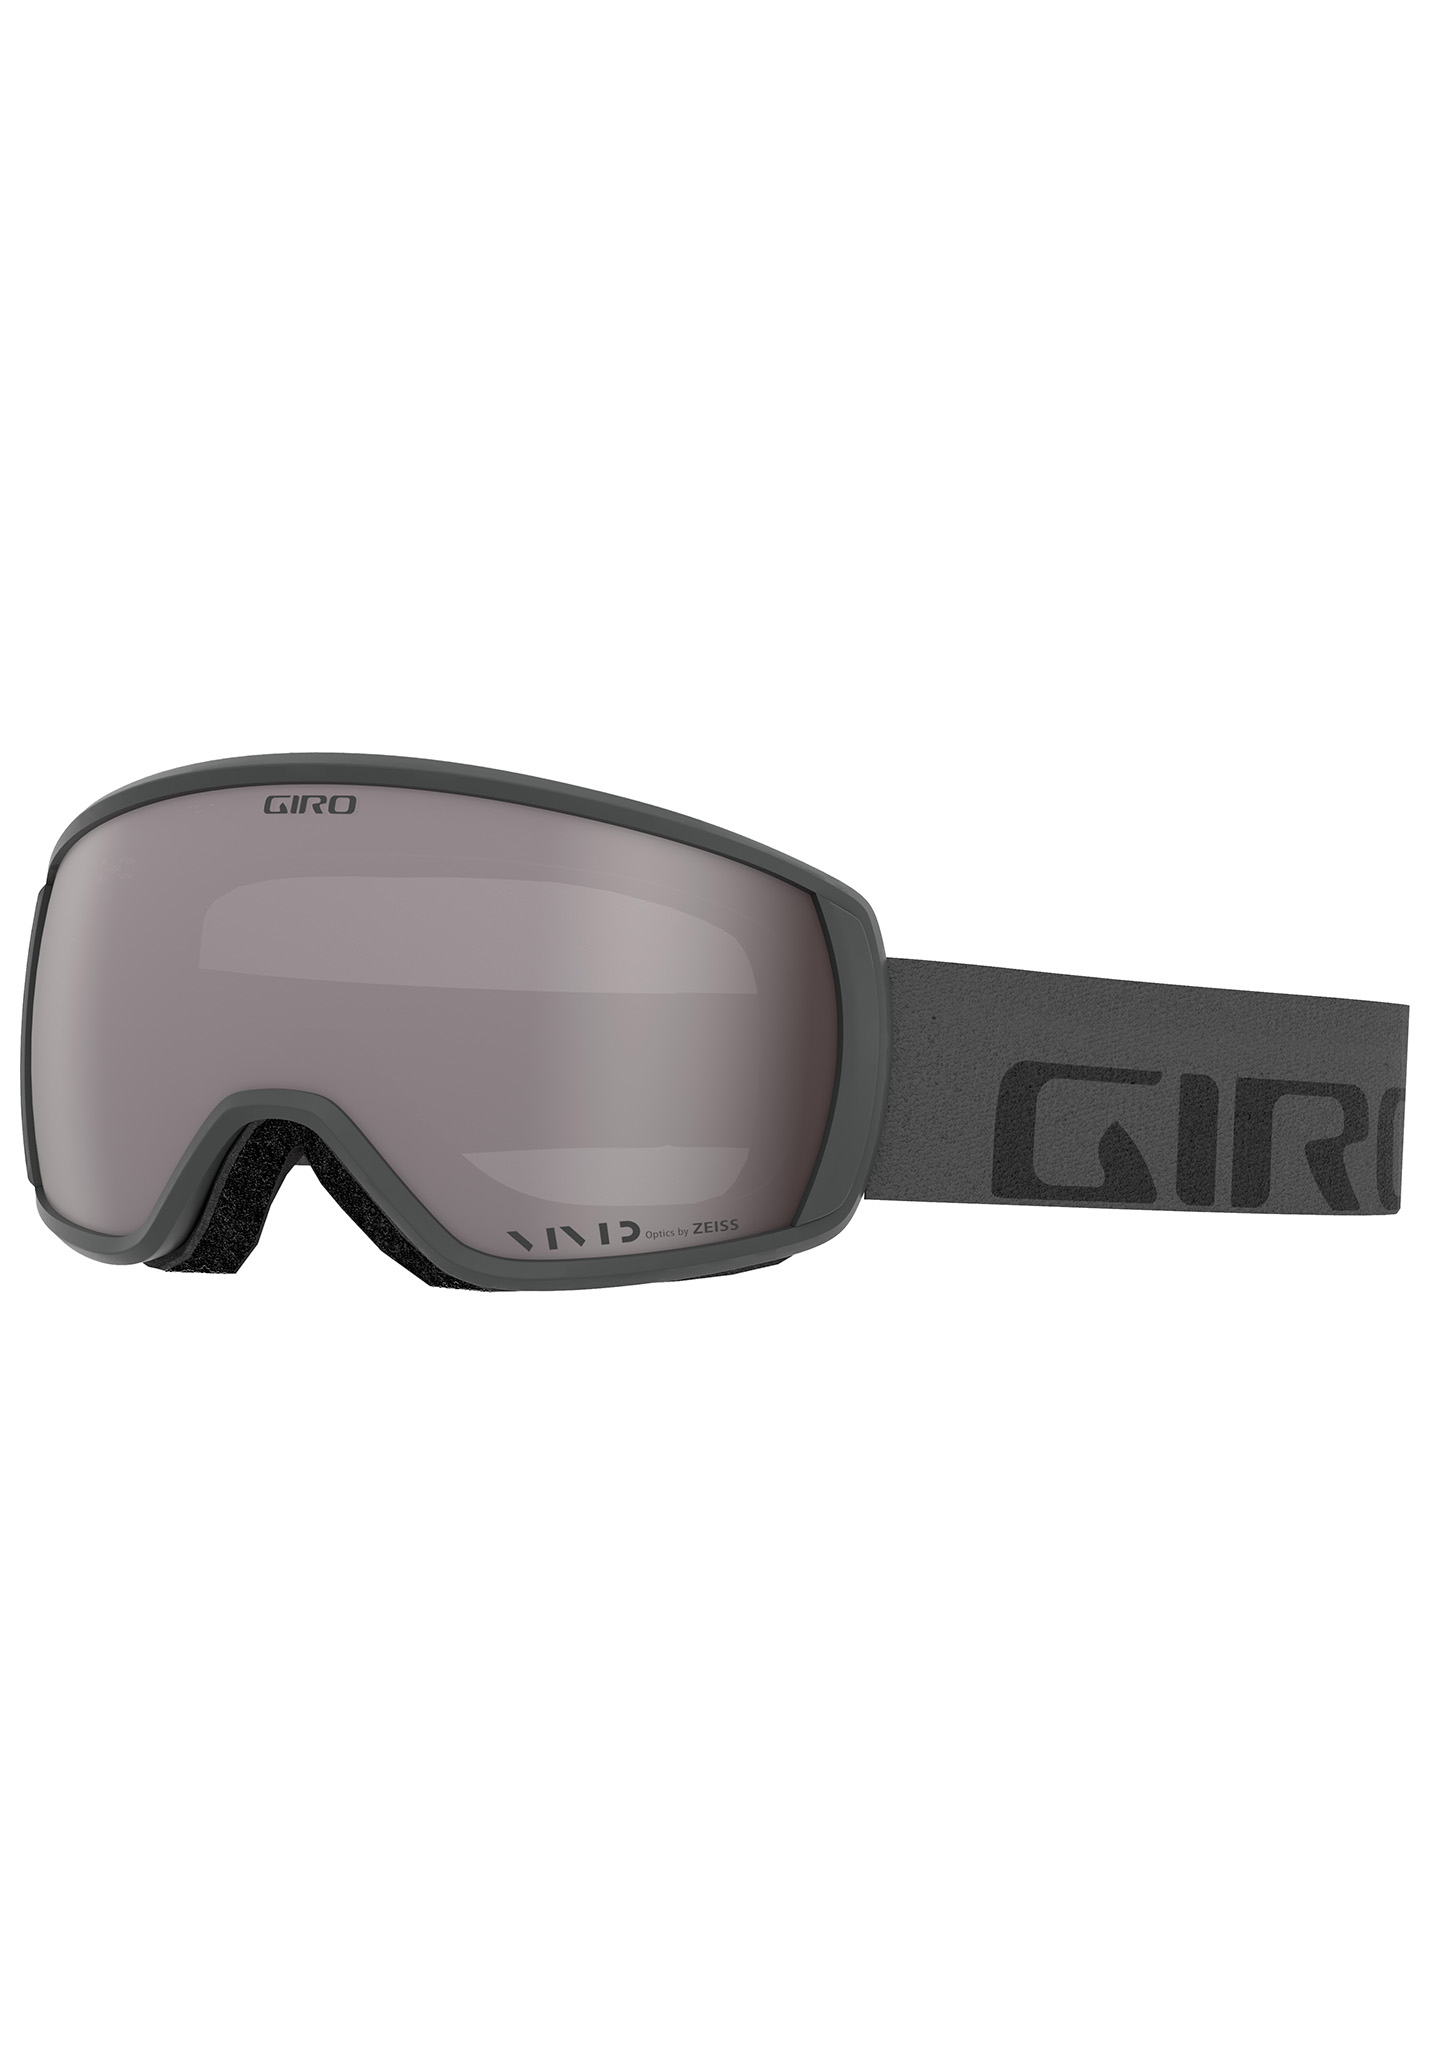 Giro Balance Snowboardbrillen graue wortmarke/vivid onyx One Size